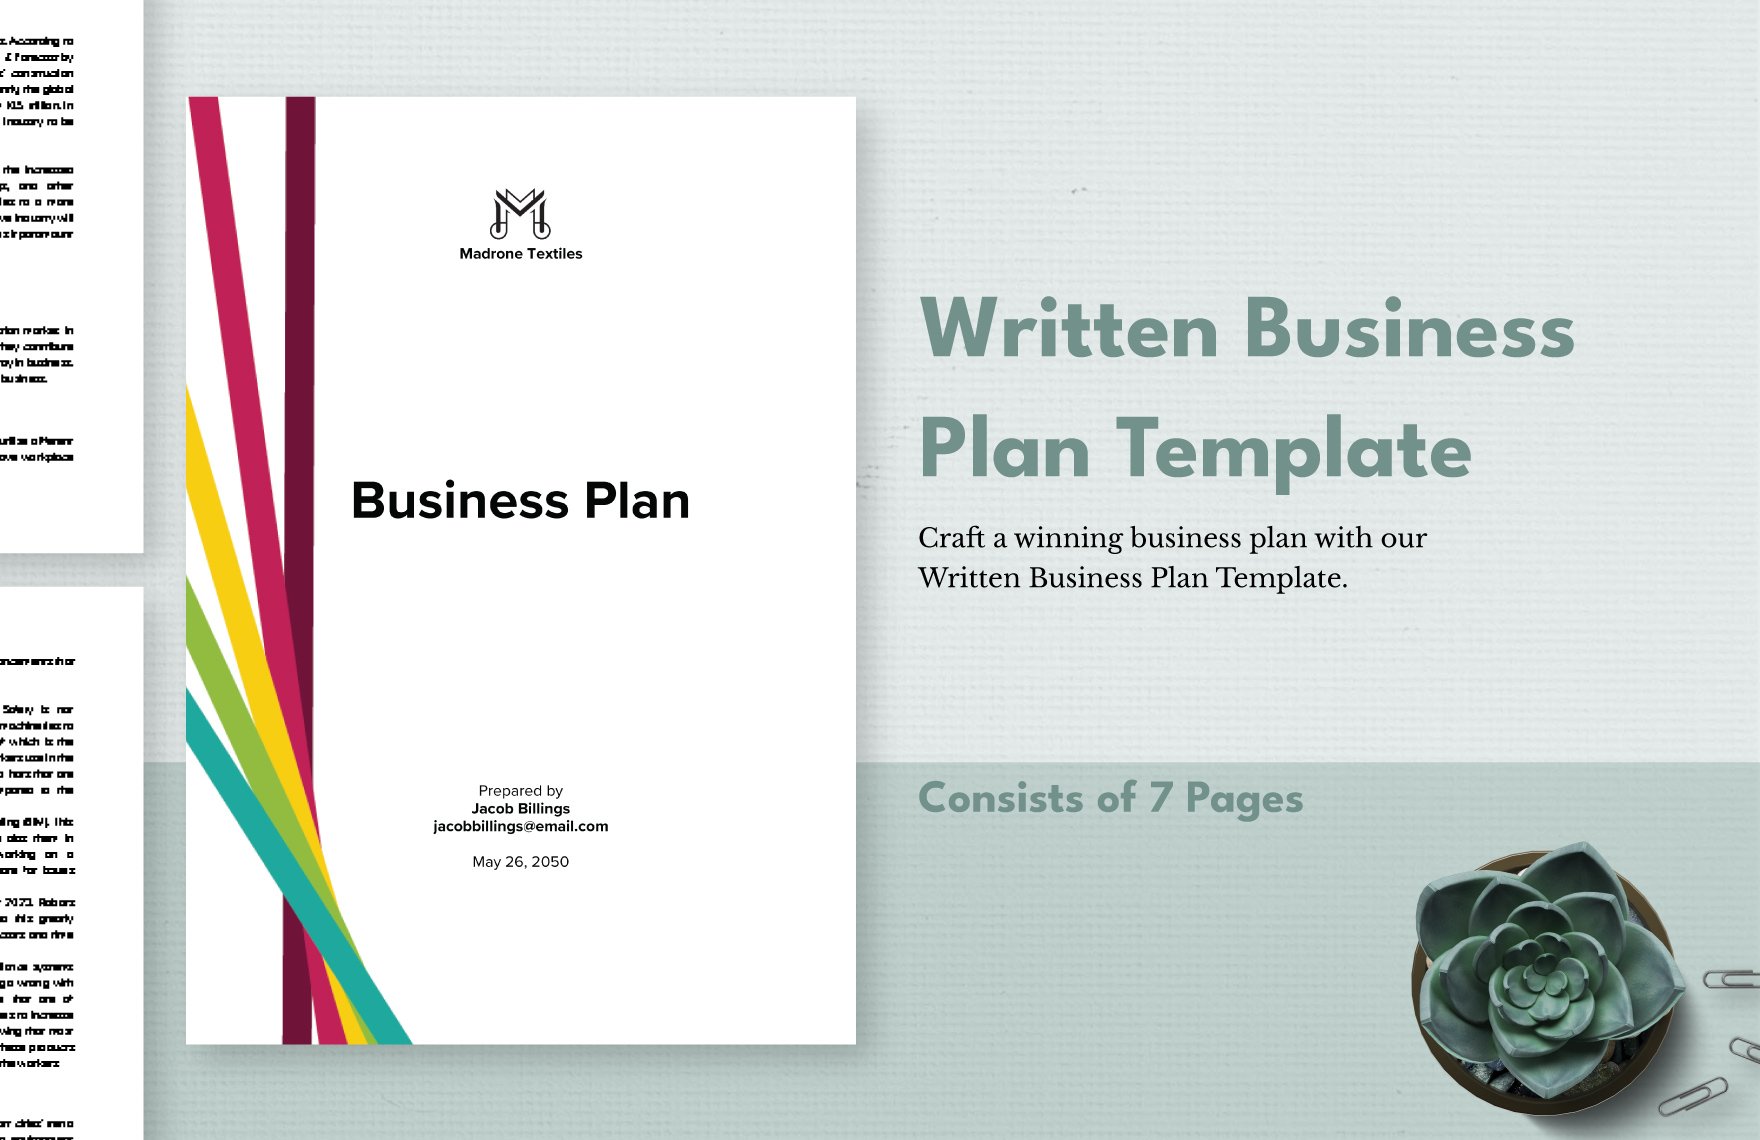 Written Business Plan Template in Word, Google Docs, PDF